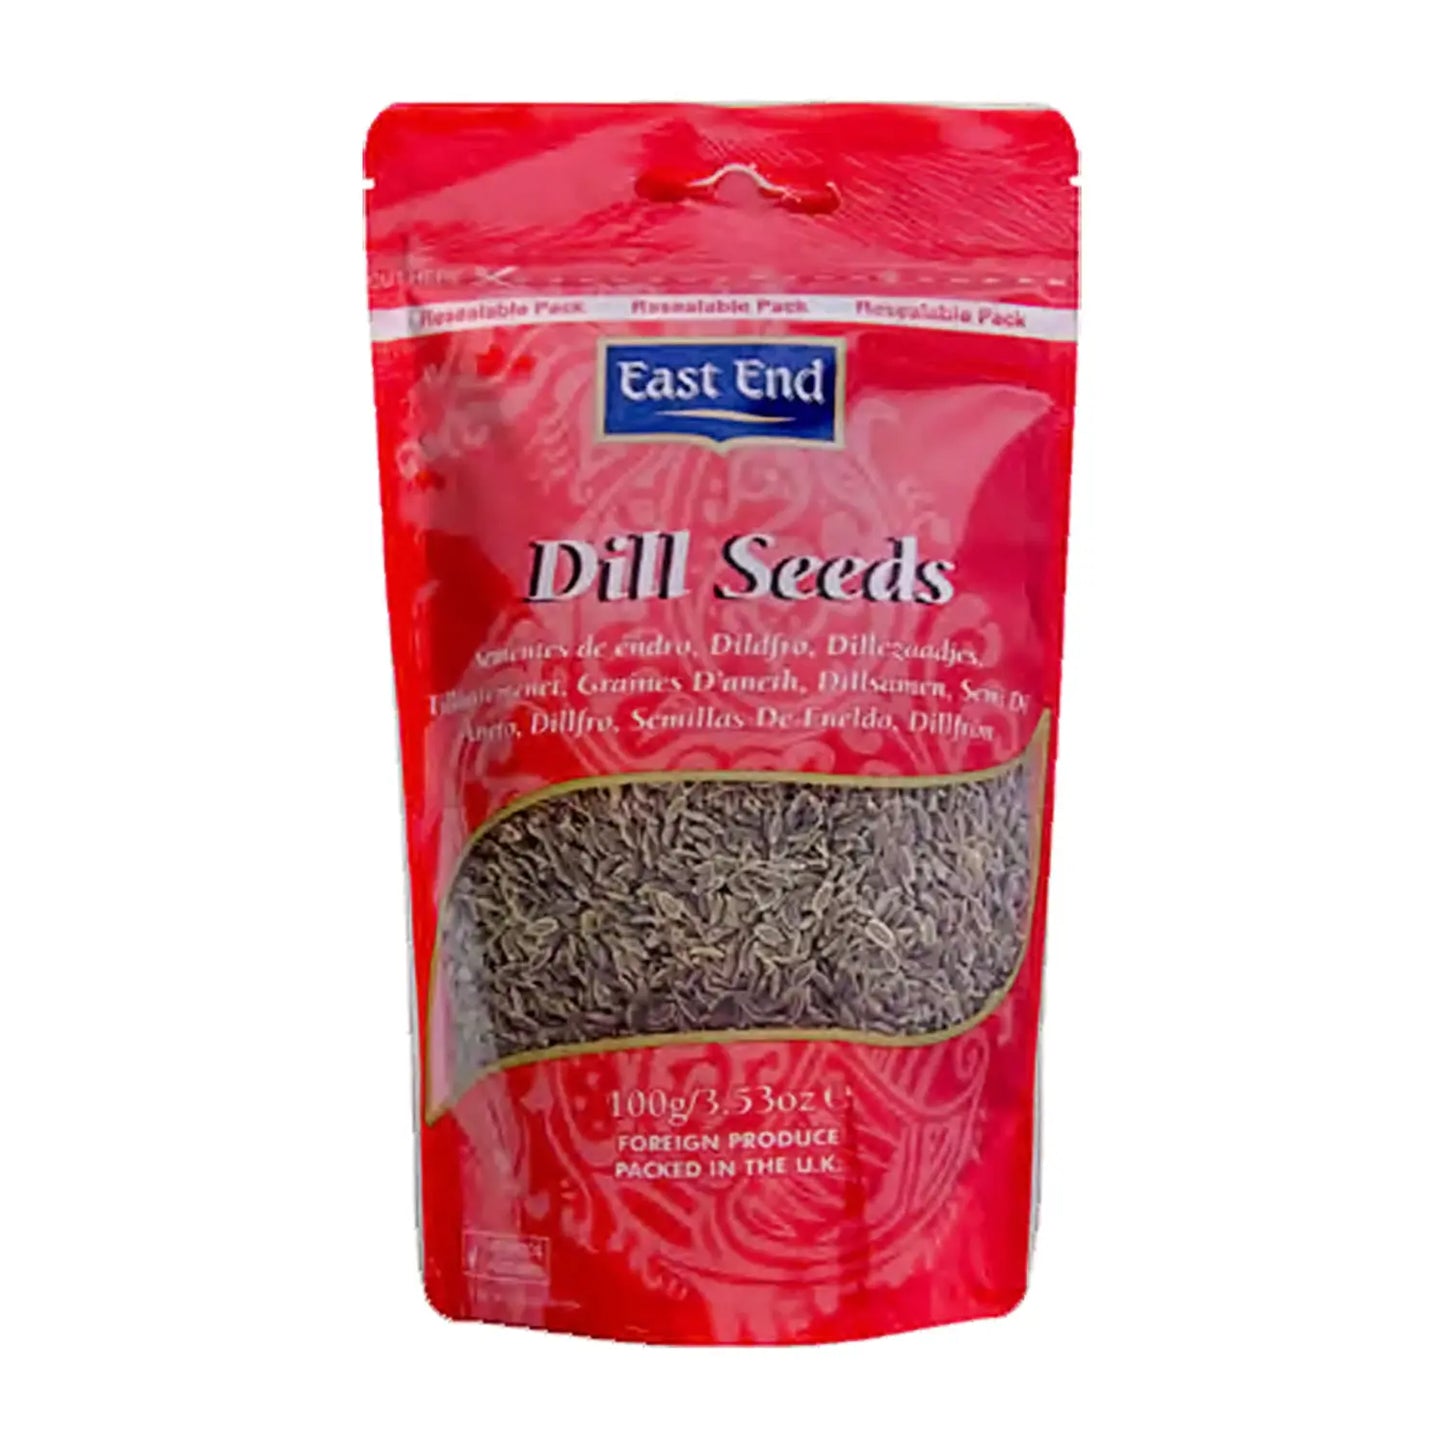 East End Dill Seeds (Soowa) 100g